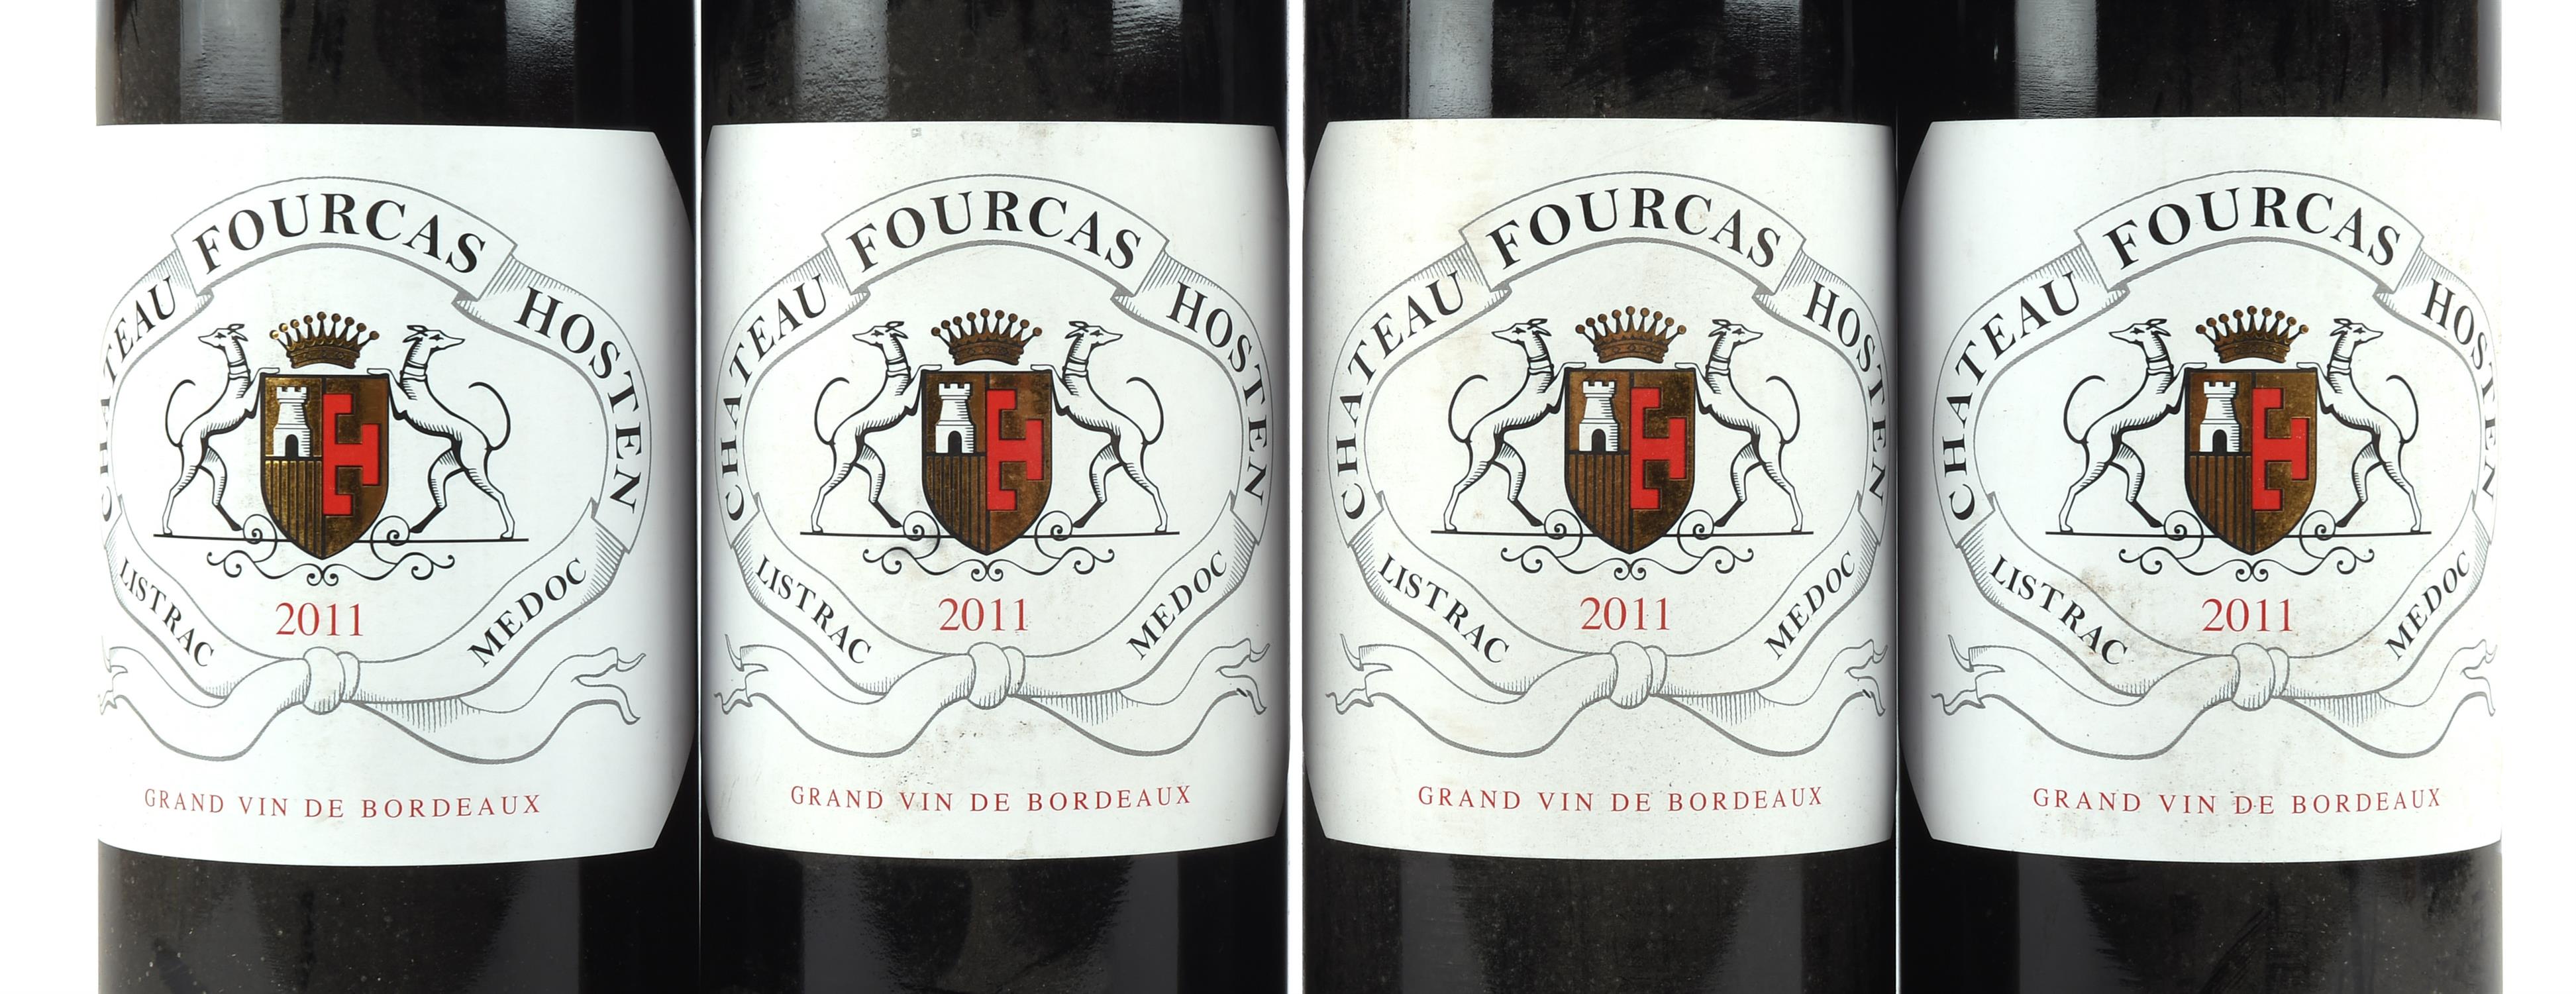 Bordeaux wines, Fourcas Hosten 2011, 4 bottles (4) Note: This wine has been stored professional - Bild 2 aus 4